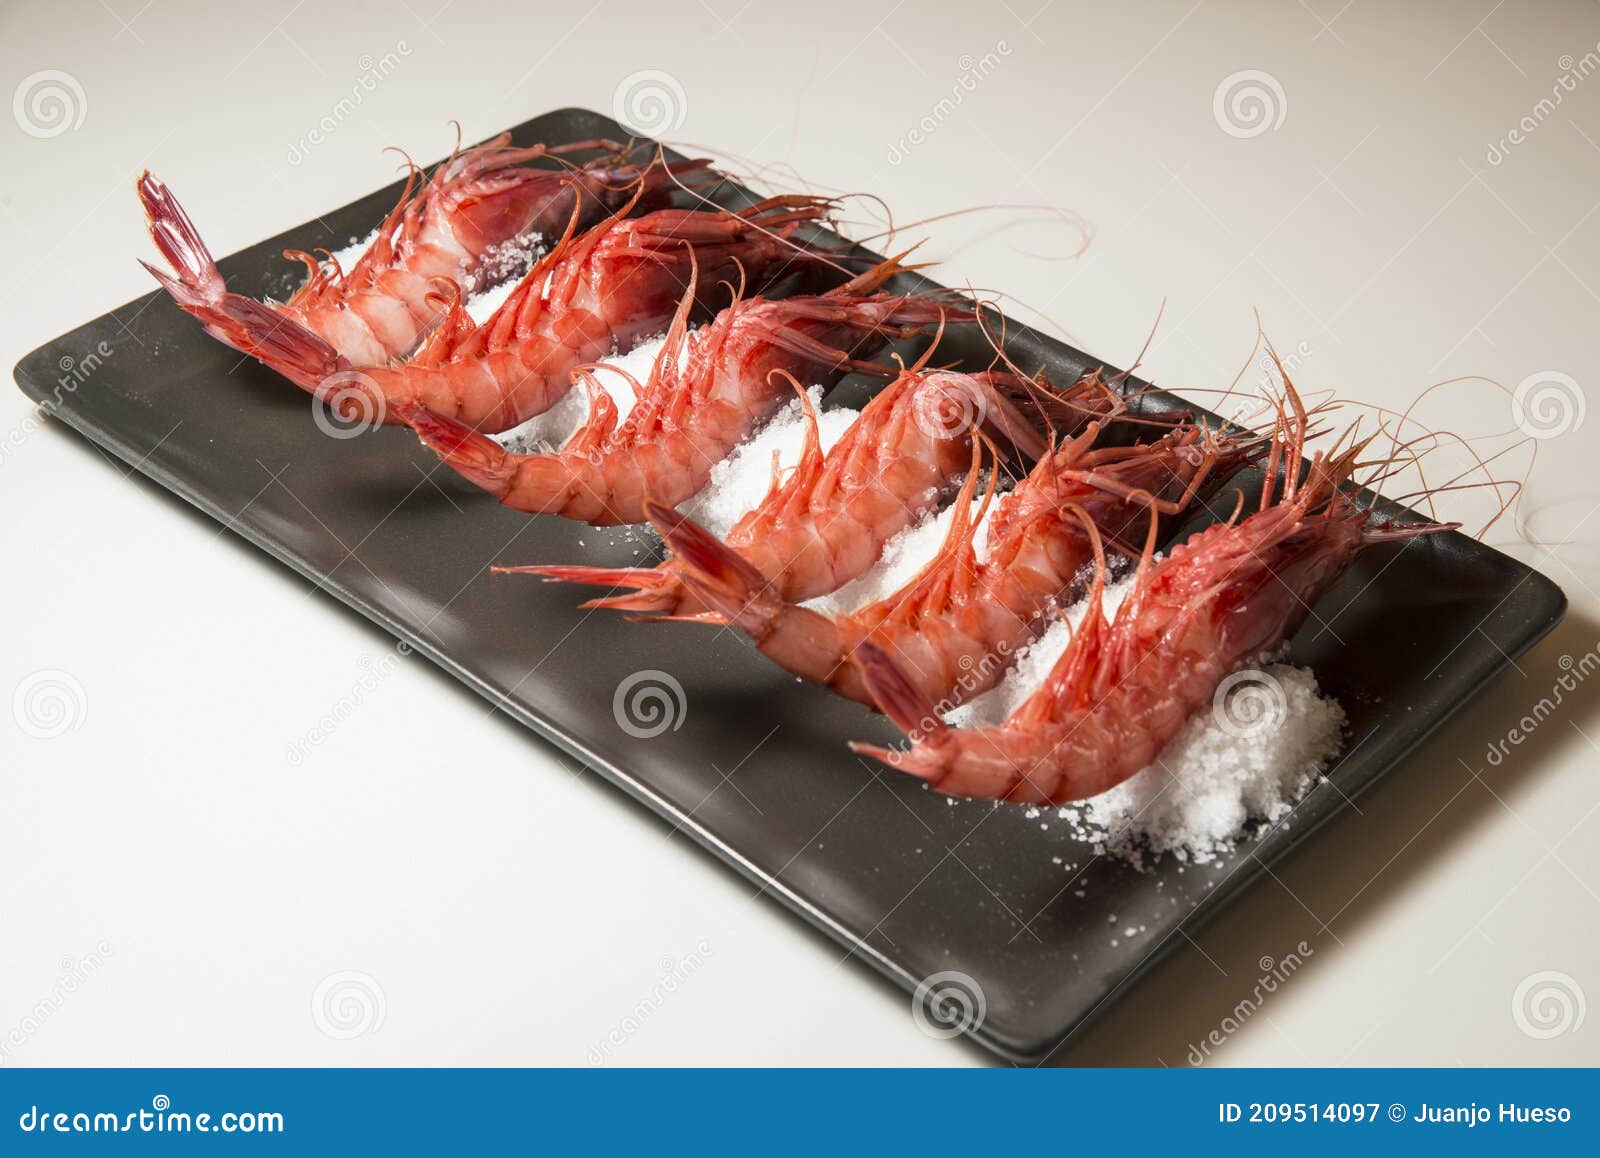 gamba cocida - cooked prawn